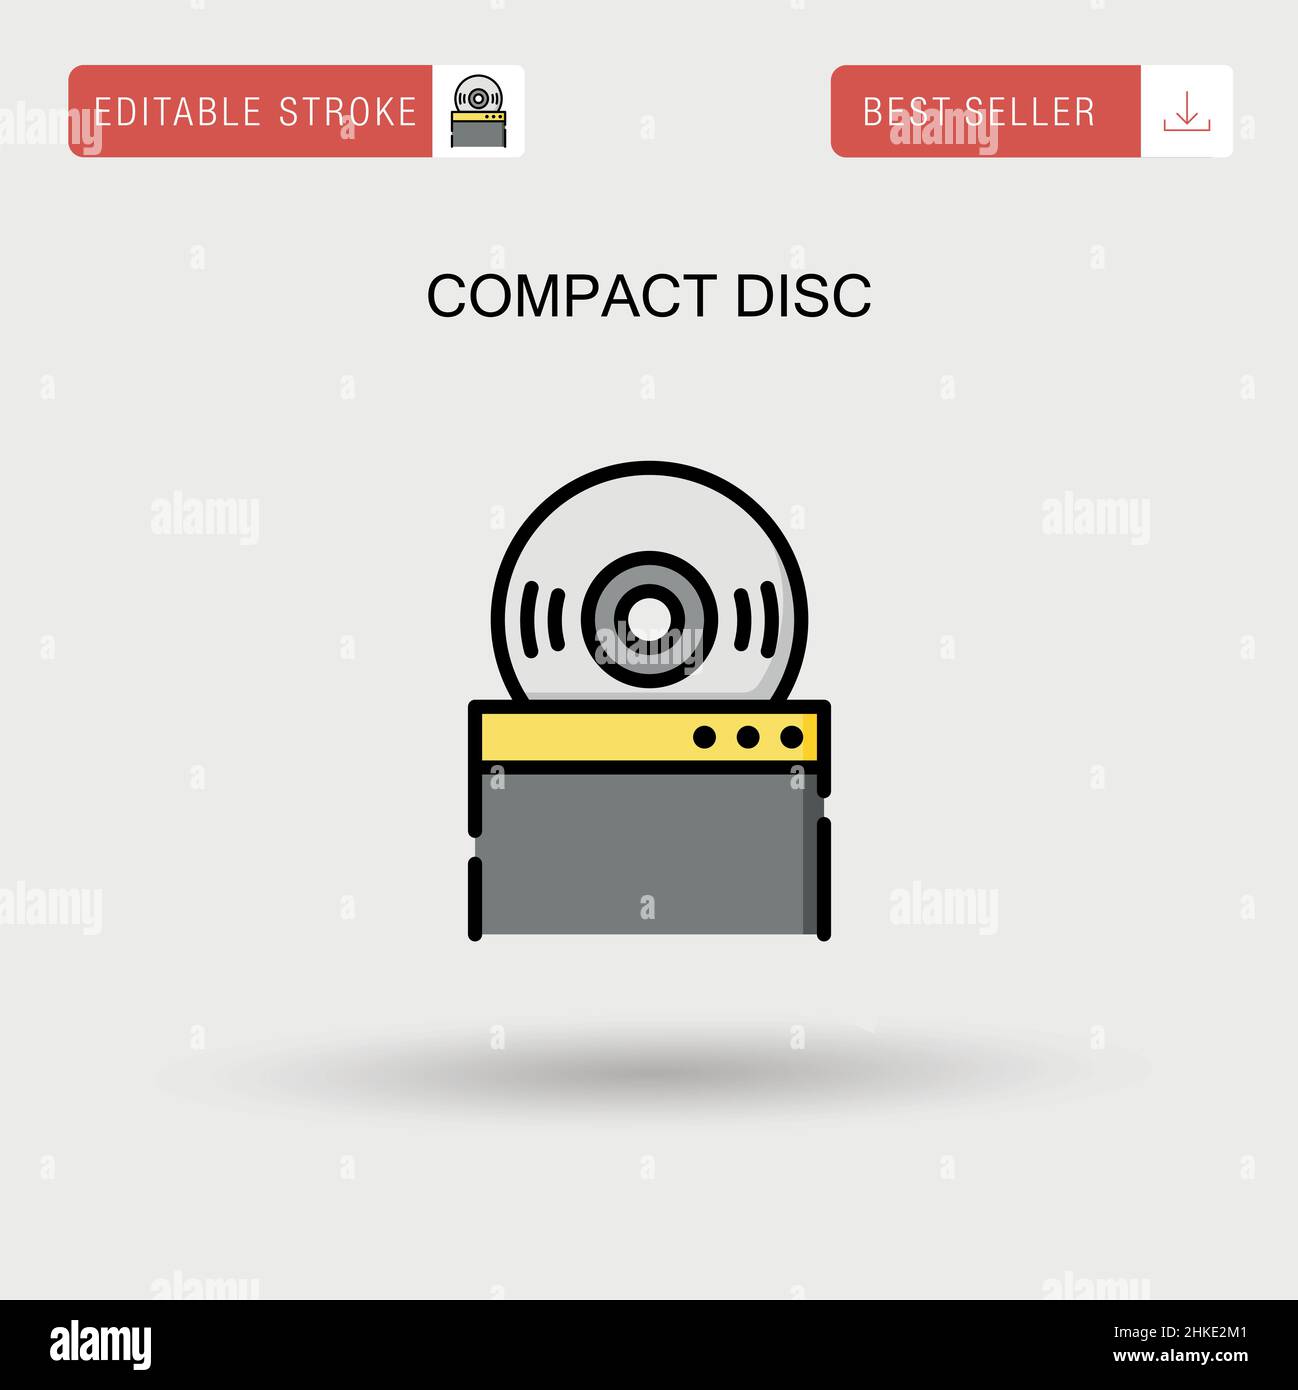 Einfaches Vektorsymbol für Compact Disc. Stock Vektor